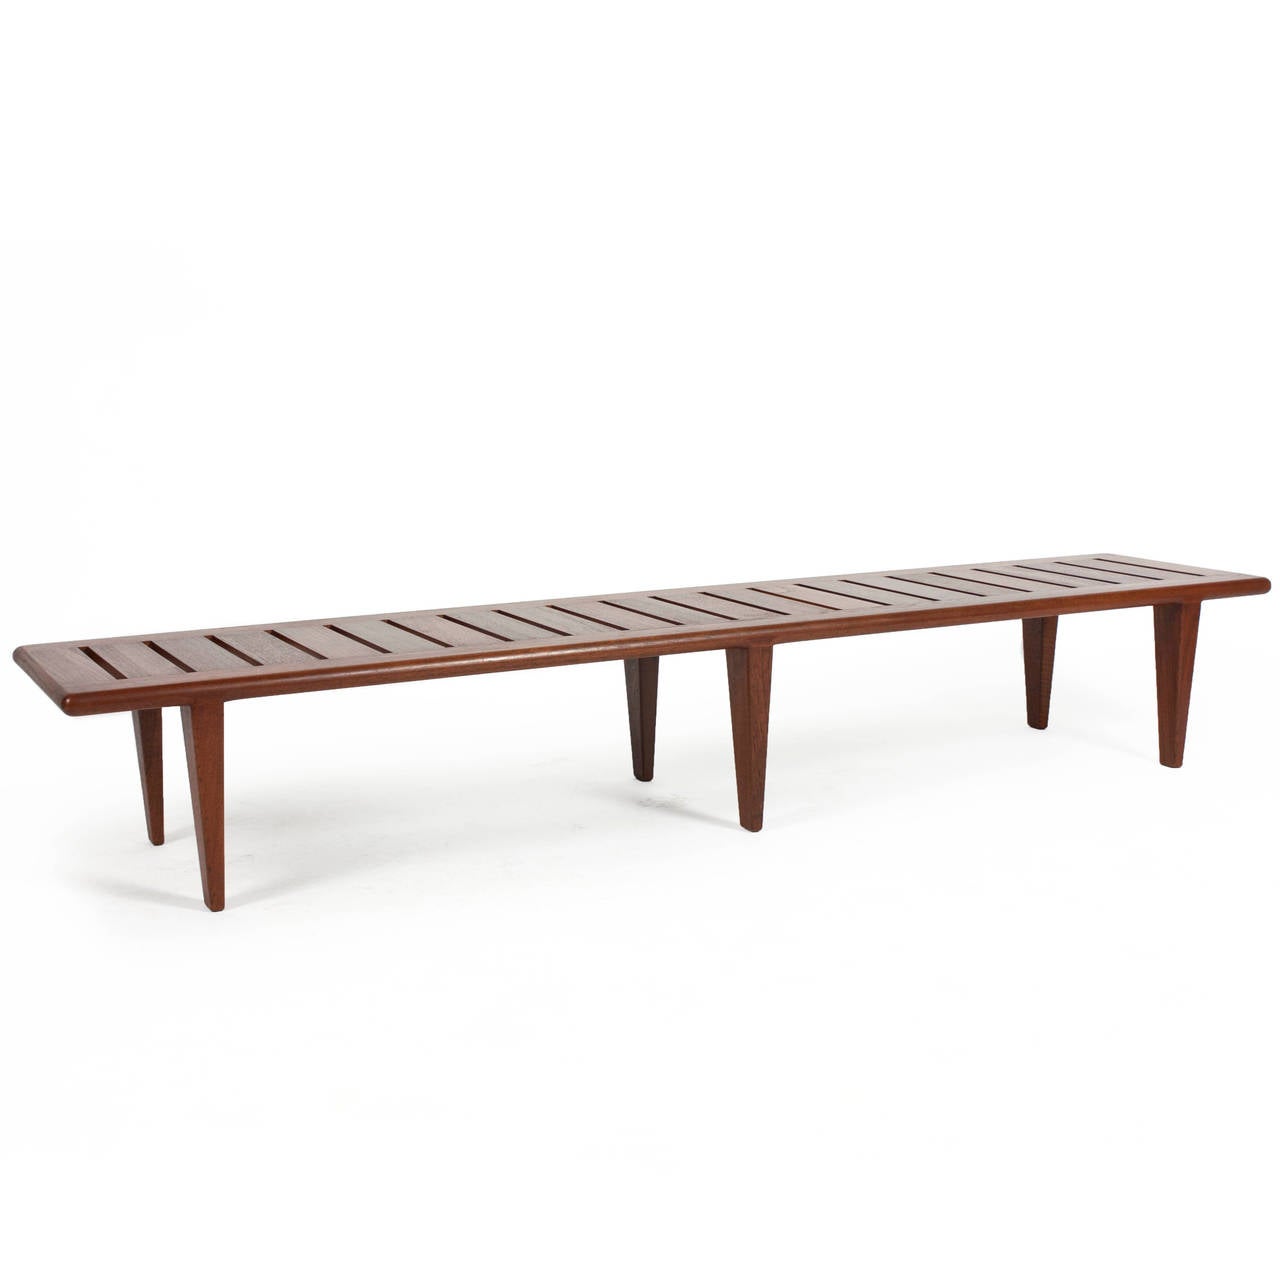 A long Hans J. Wegner slatted teak bench. 

Designed by Hans J. Wegner 1958, made by cabinetmaker Johannes Hansen. 

A simple and rare piece in fine original condition.